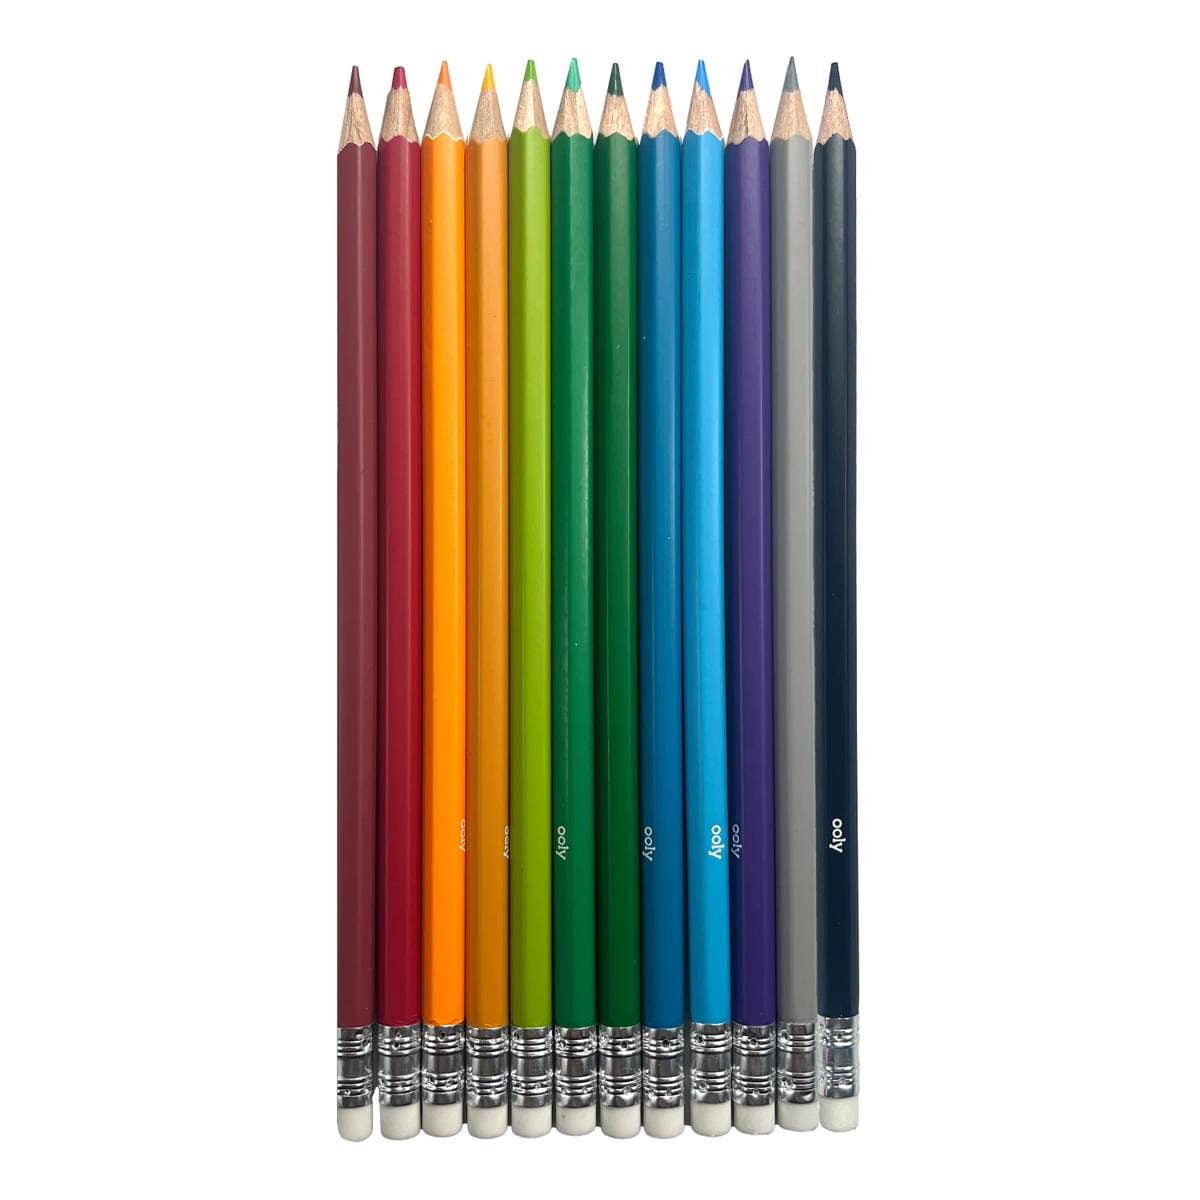 OOLY - Un-Mistake-Ables! Erasable Colored Pencils- (Set of 12)